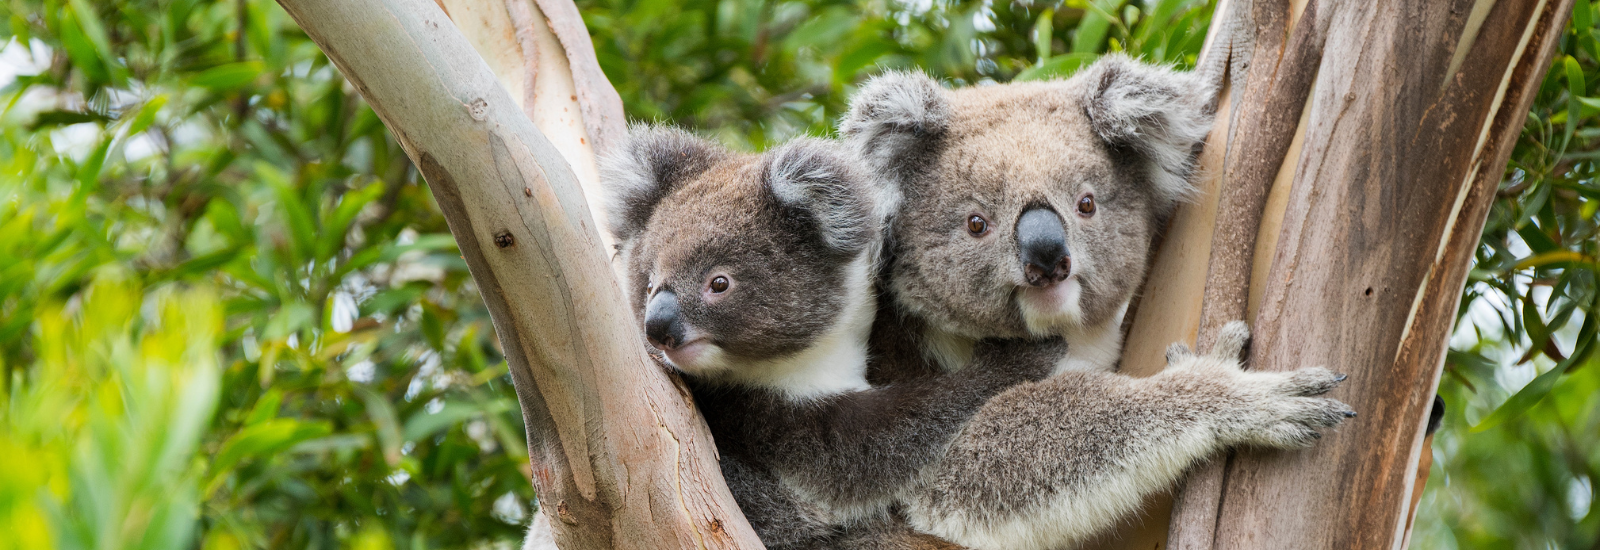 Two Koalas in a tree banner image